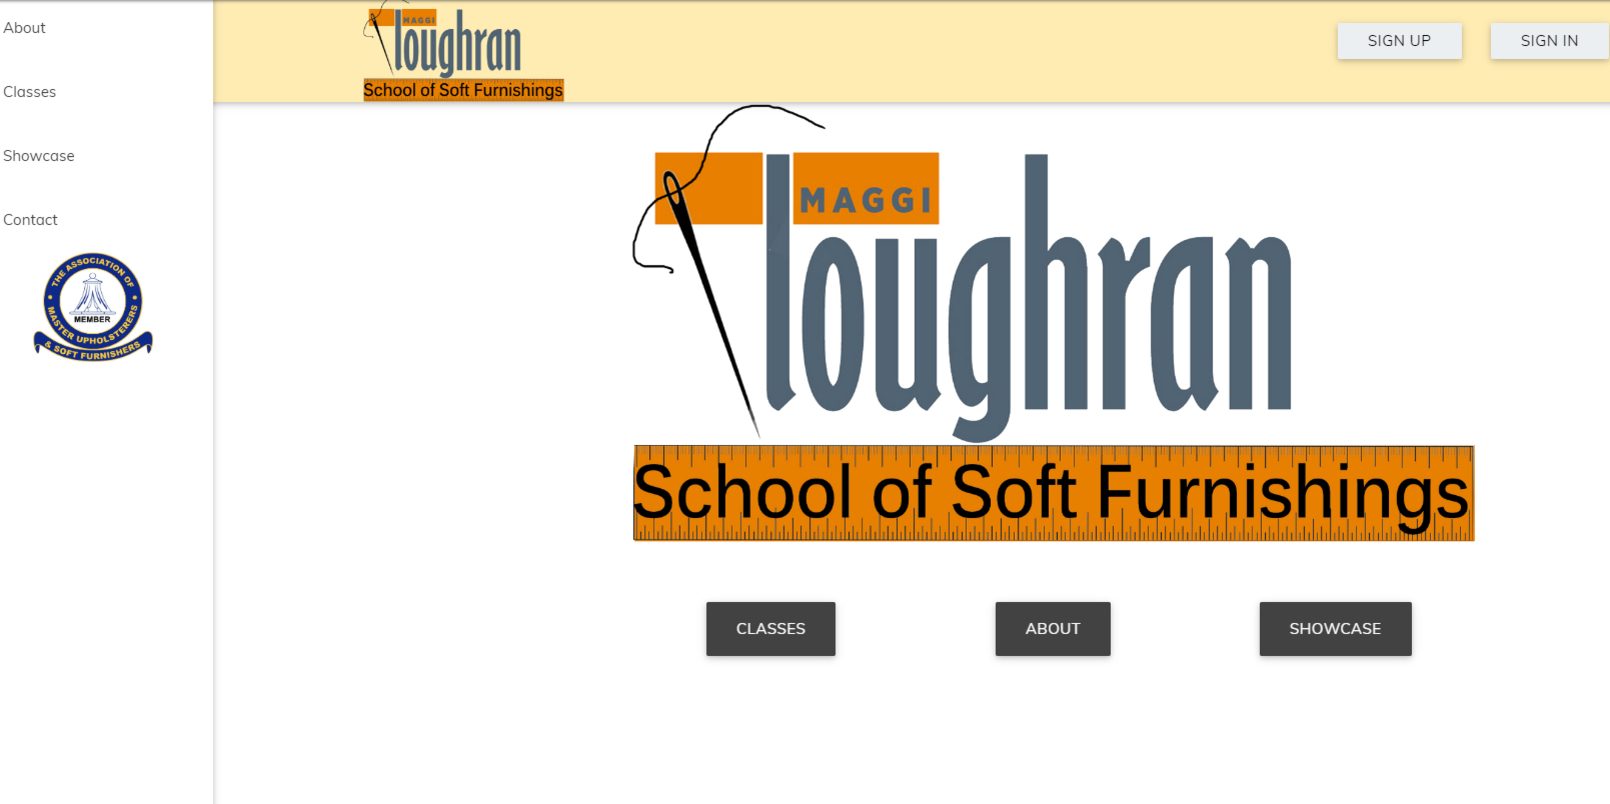 The previous Maggi Loughran website, displayed on desktop